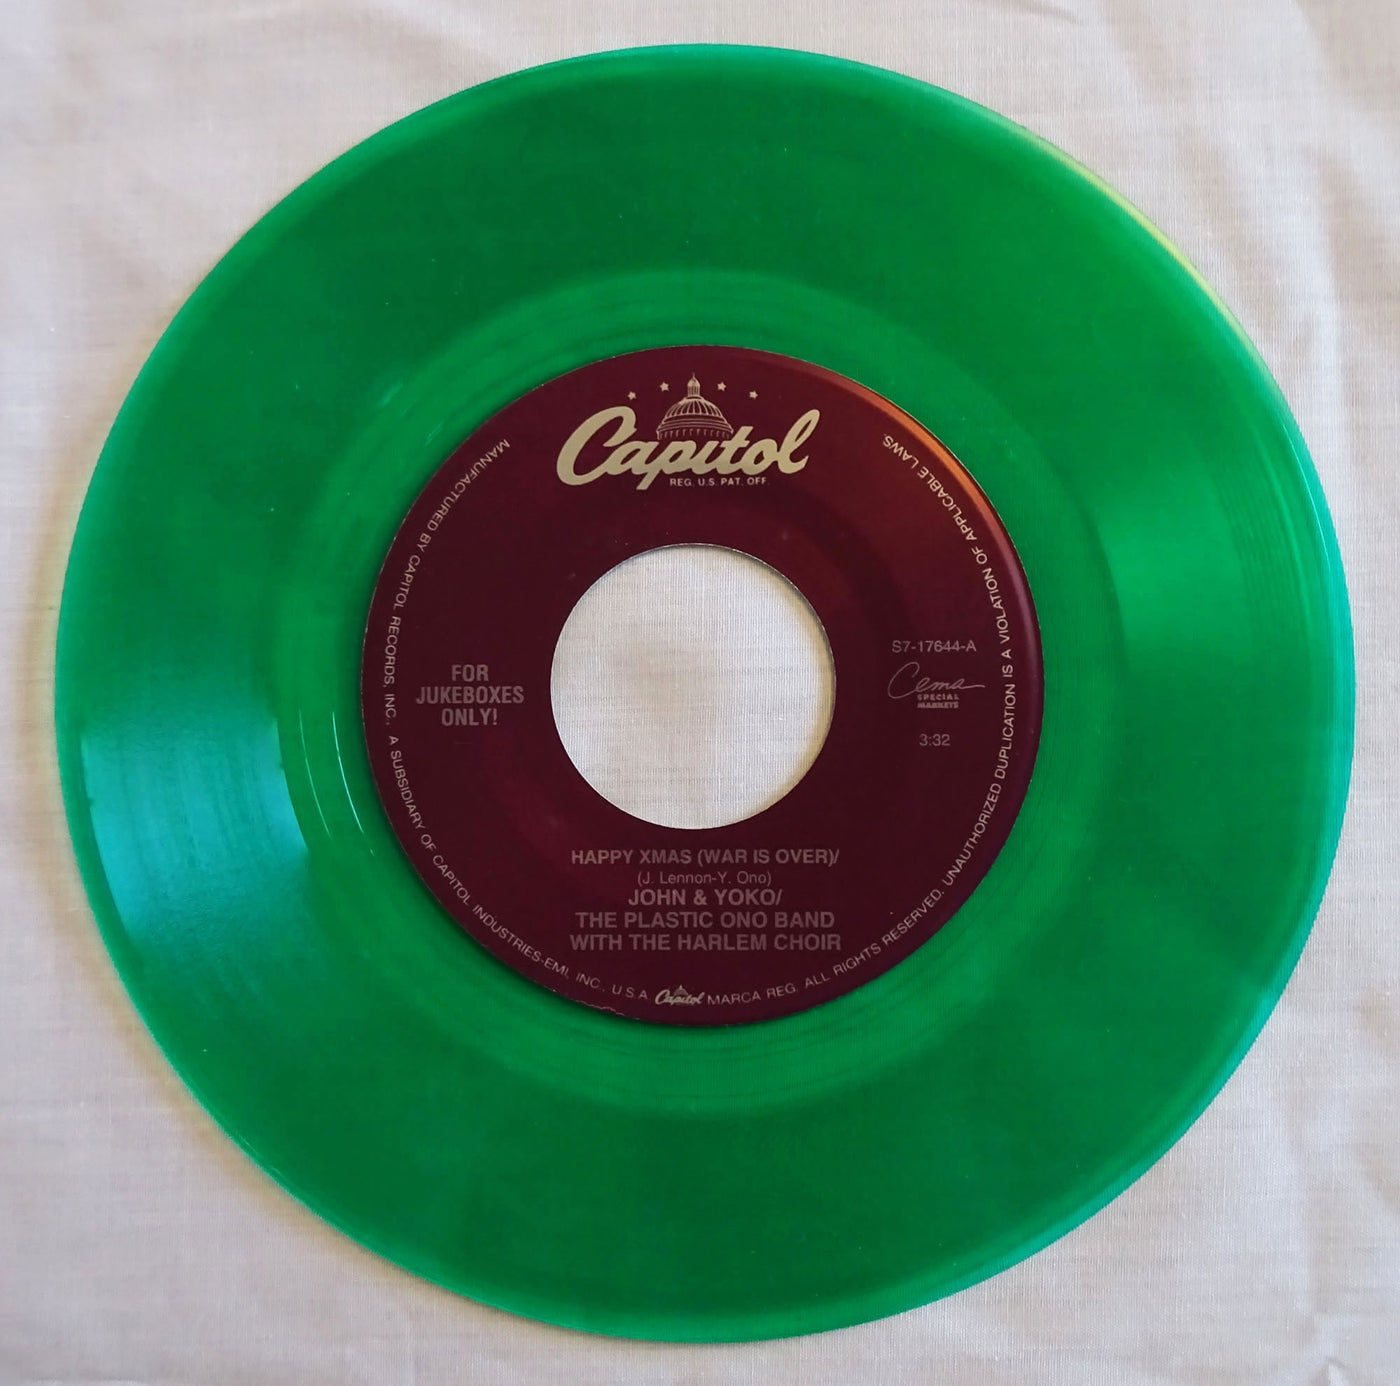 John & Yoko-Plastic Ono Band With Harlem Choir - Happy Xmas (War Is Over)-Listen The Snow Is Falling (Jukebox Green) (1971) Vinyl Single 45rpm S7-17644